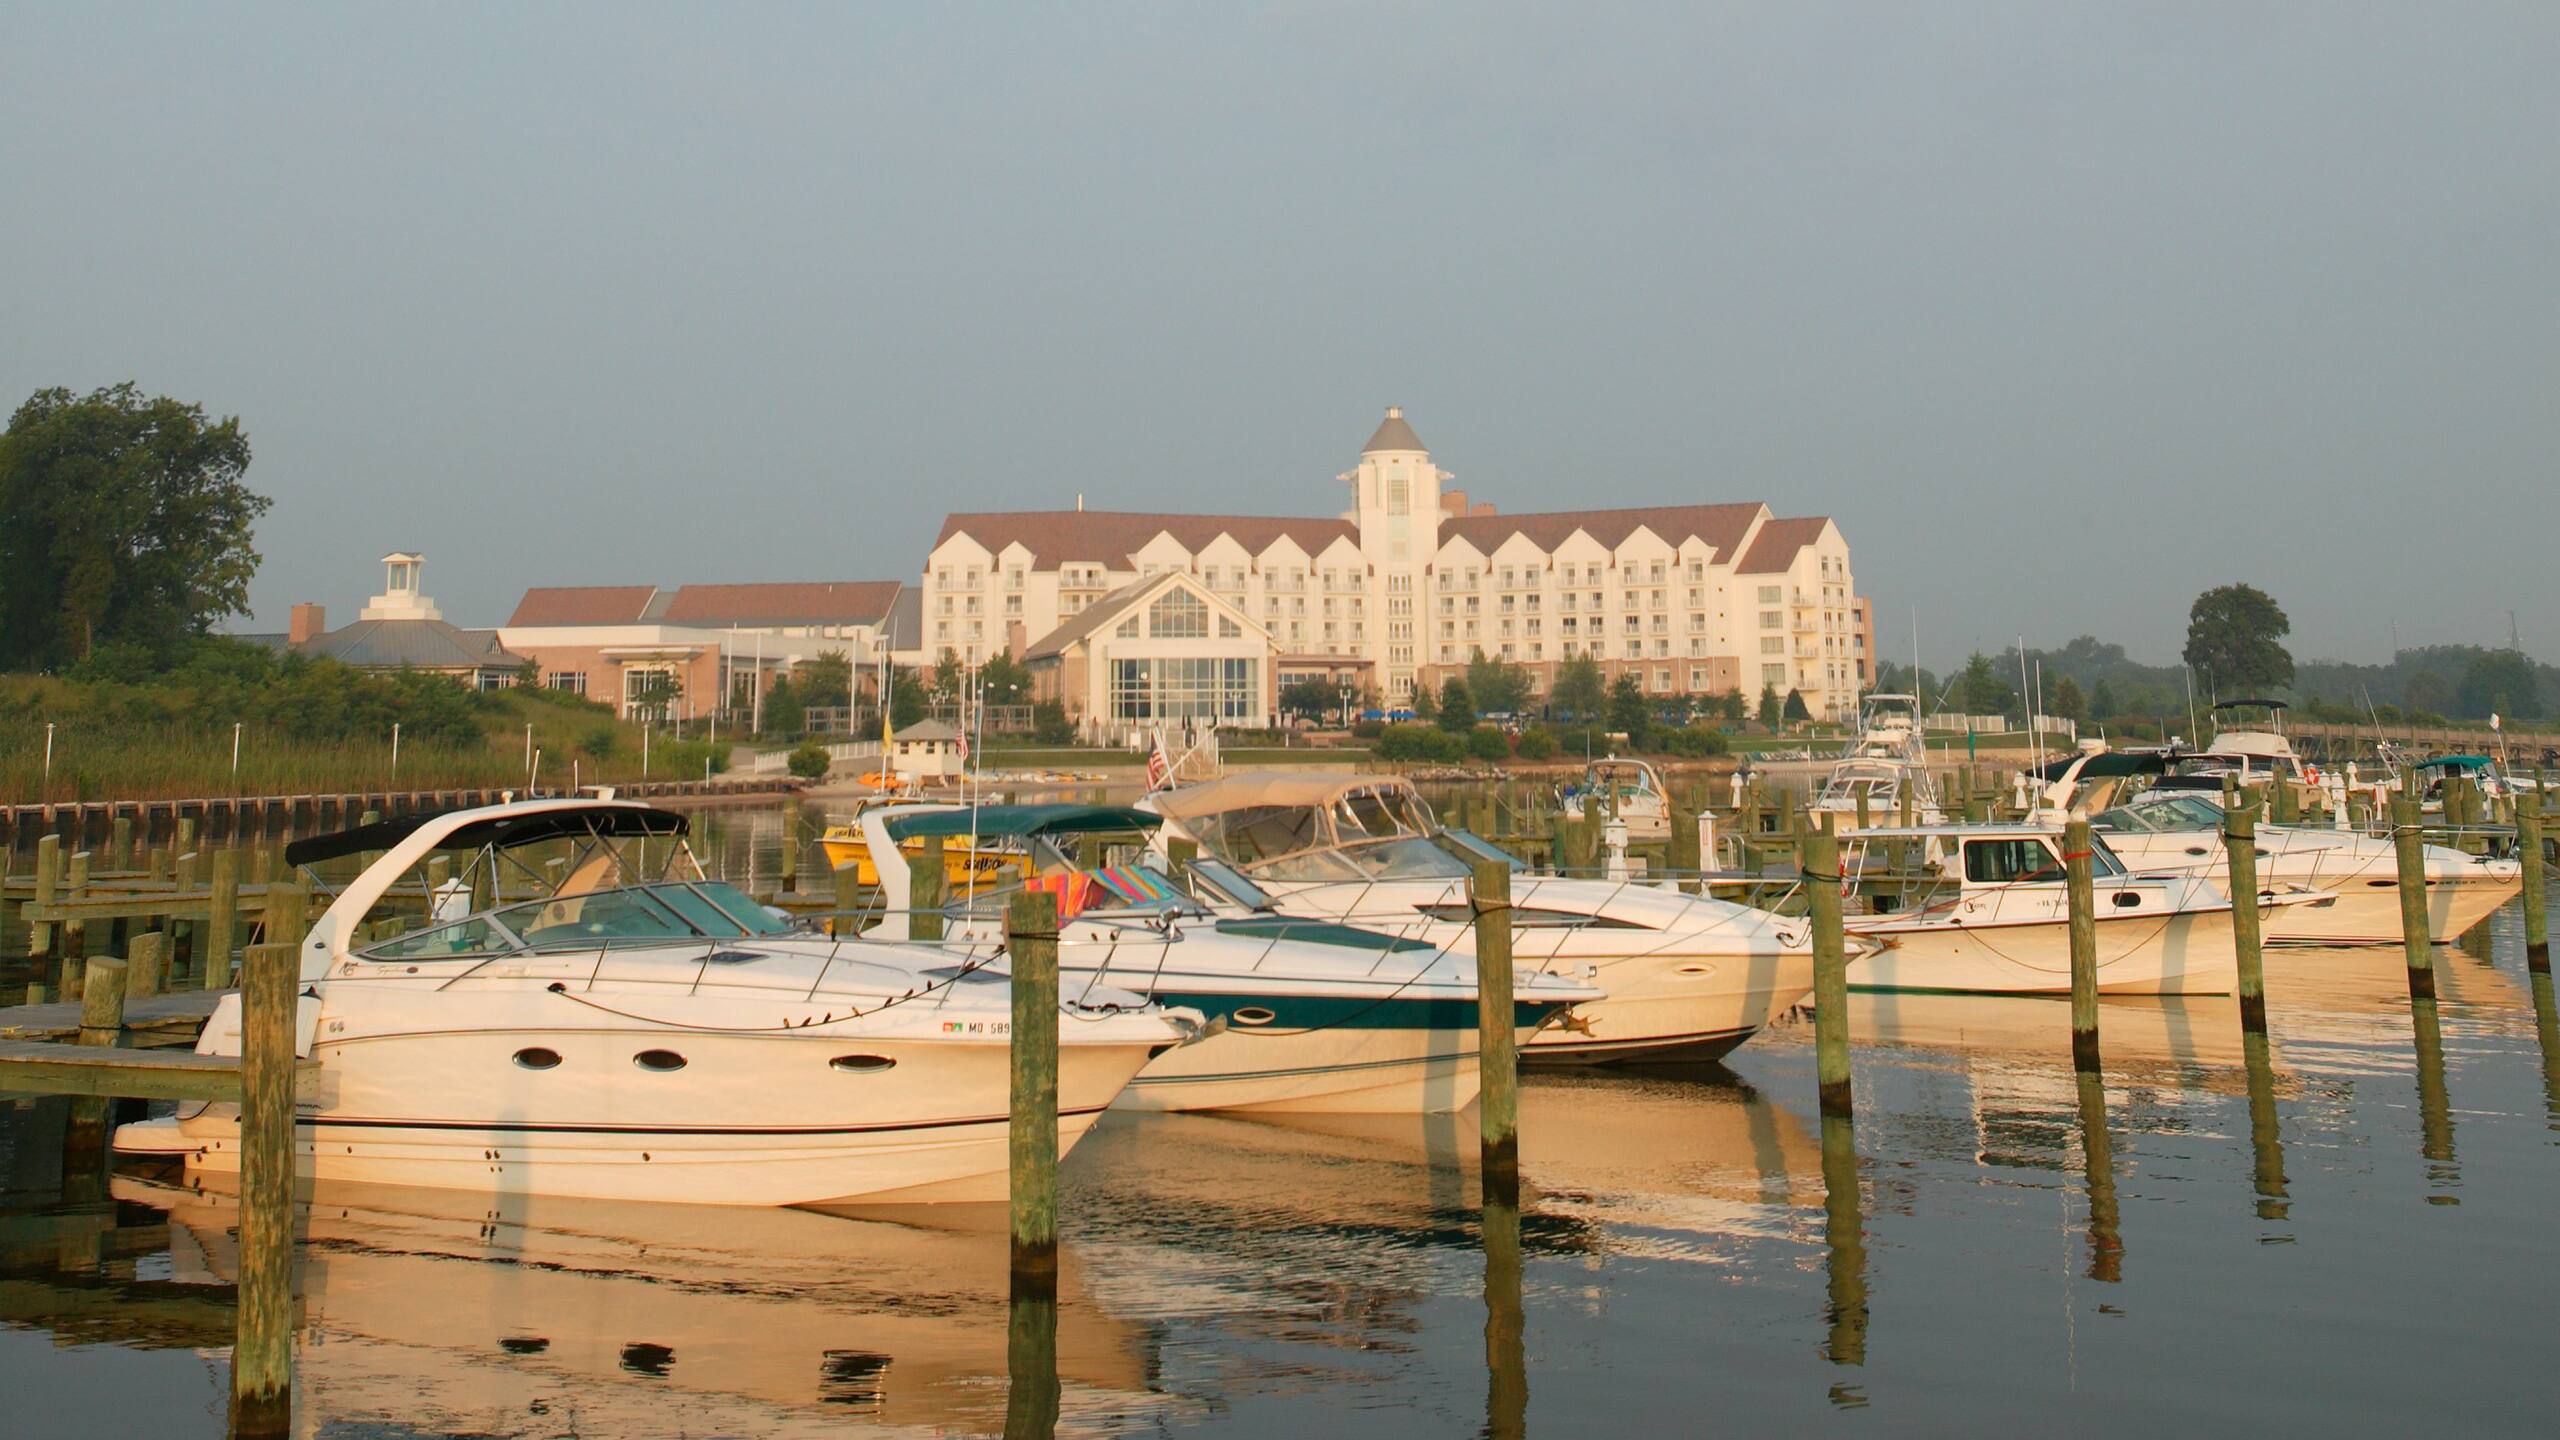 Hyatt Regency Chesapeake Bay Golf Resort, Spa and Marina Harbor with Hotel